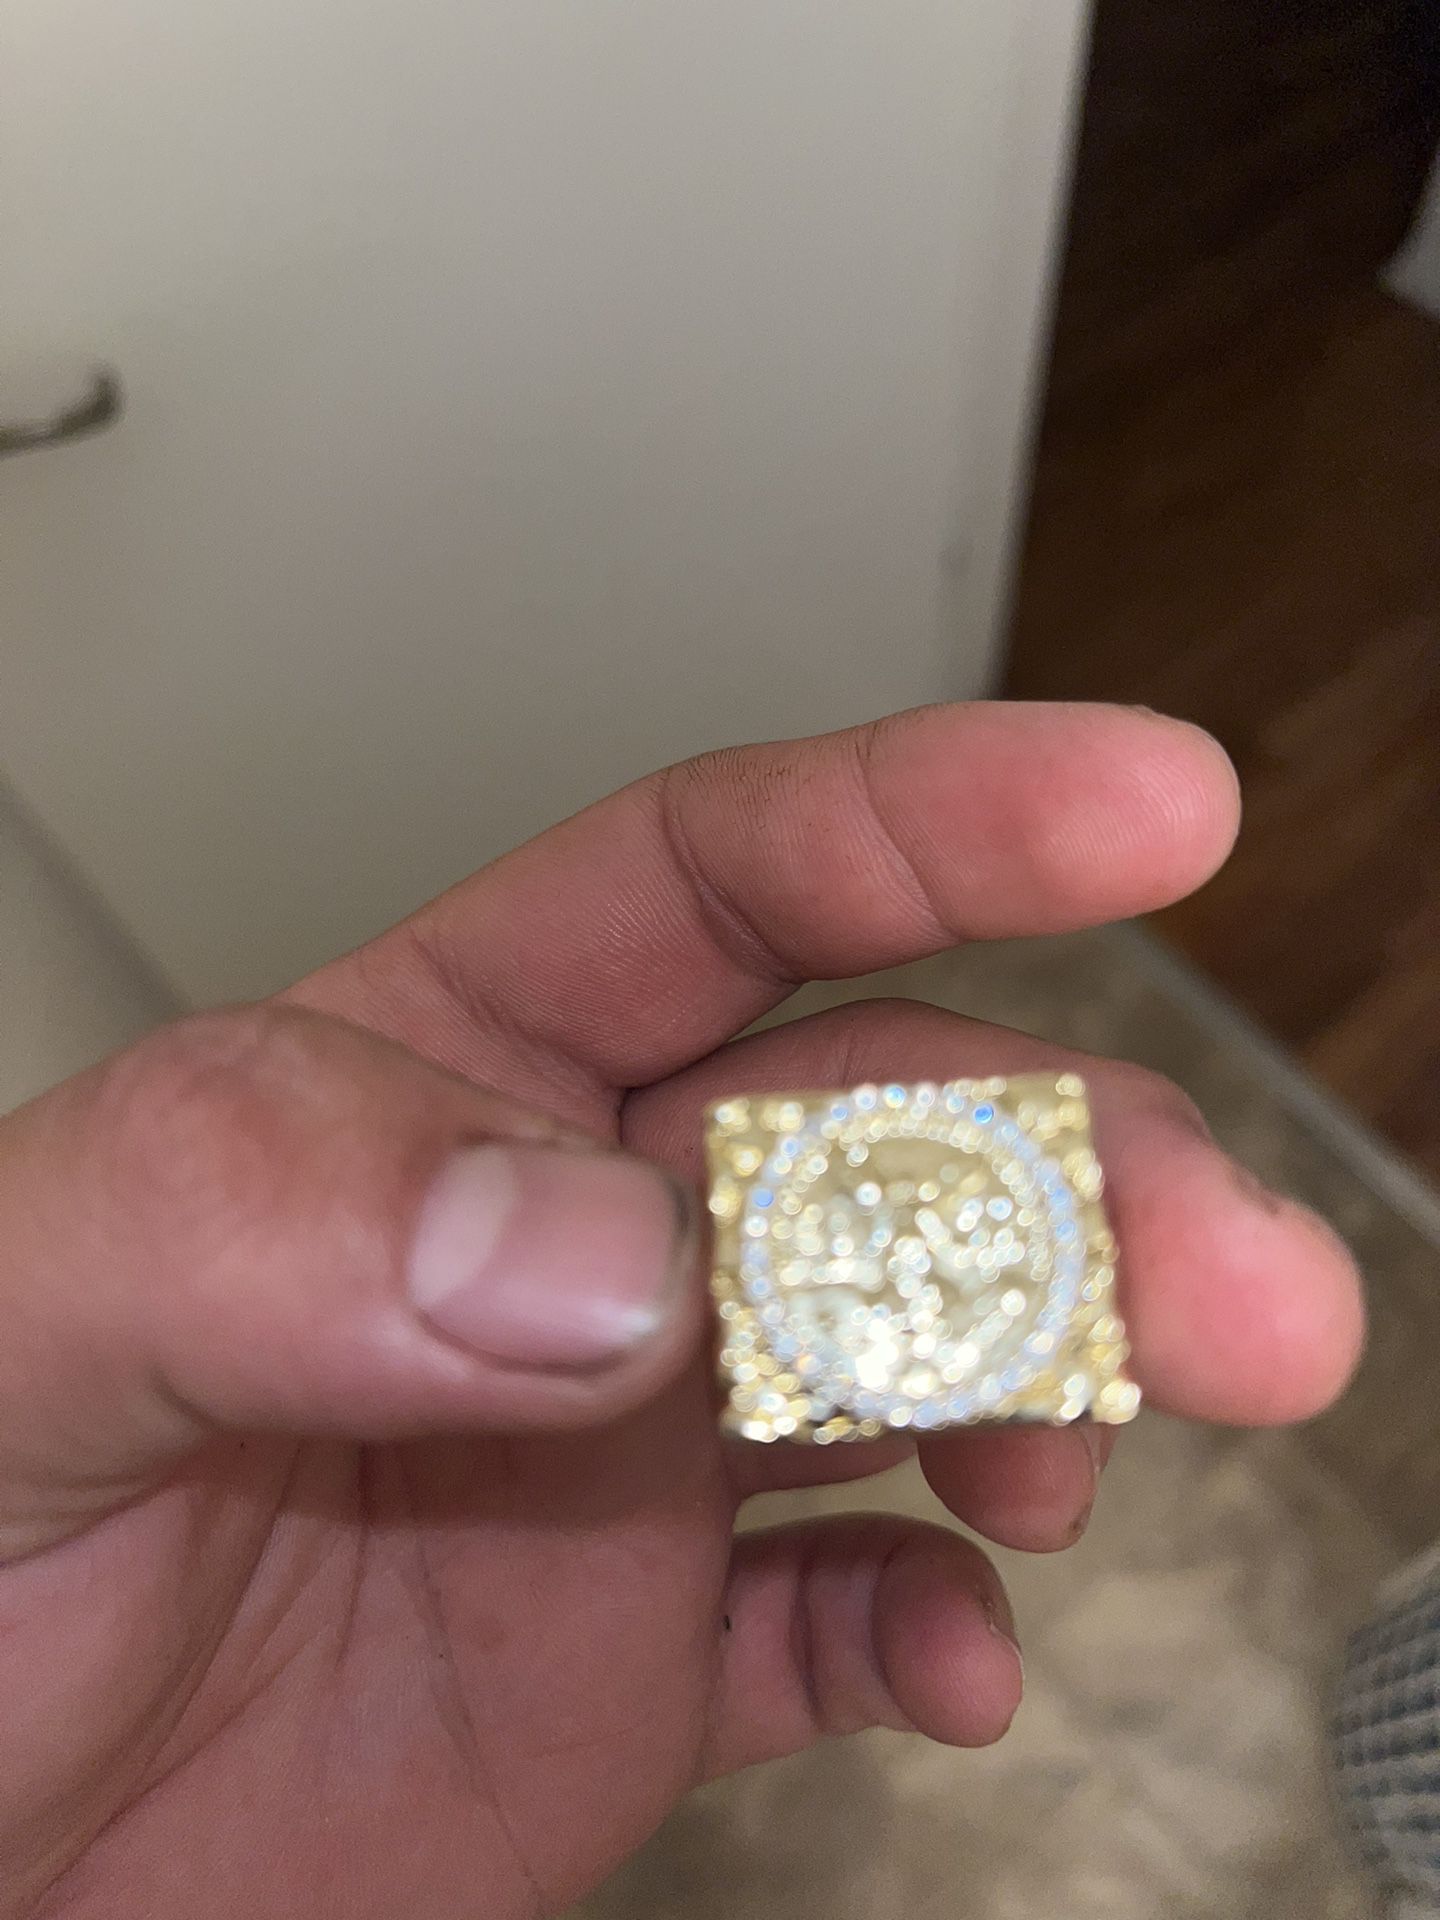 Centenario Gold Plated Ring 